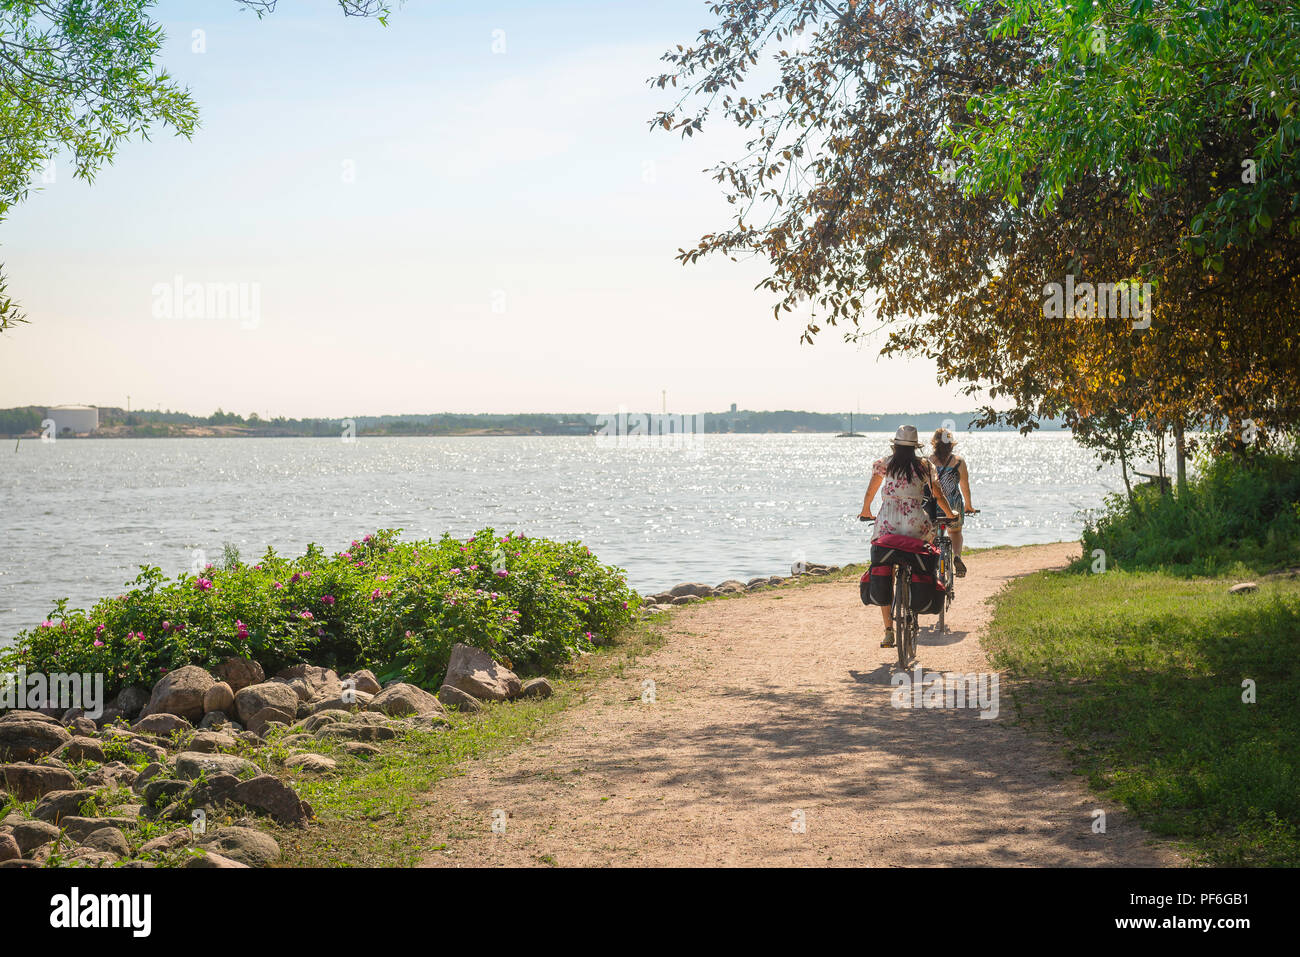 Helsinki island summer, view on a summer morning of two young women riding on a cycle path on Katajanokka Island near Helsinki, Finland. Stock Photo